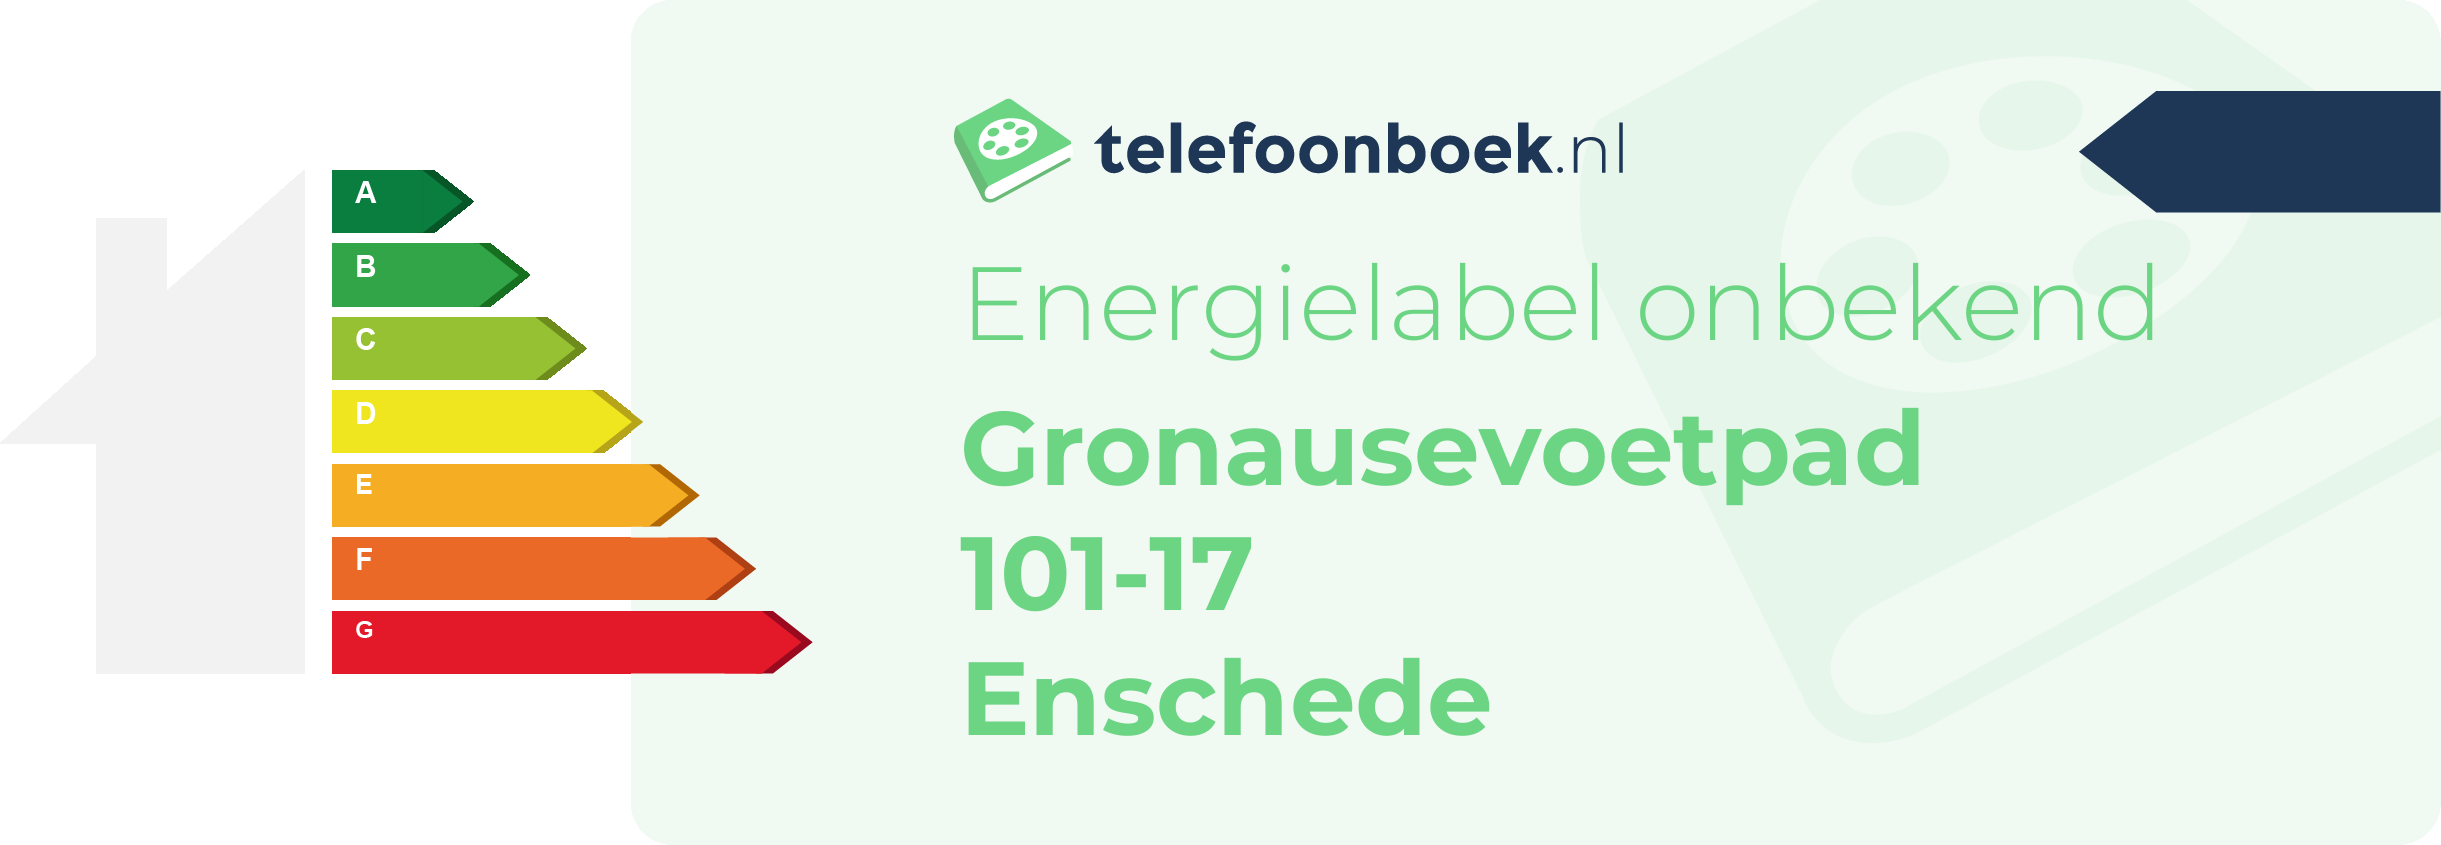 Energielabel Gronausevoetpad 101-17 Enschede